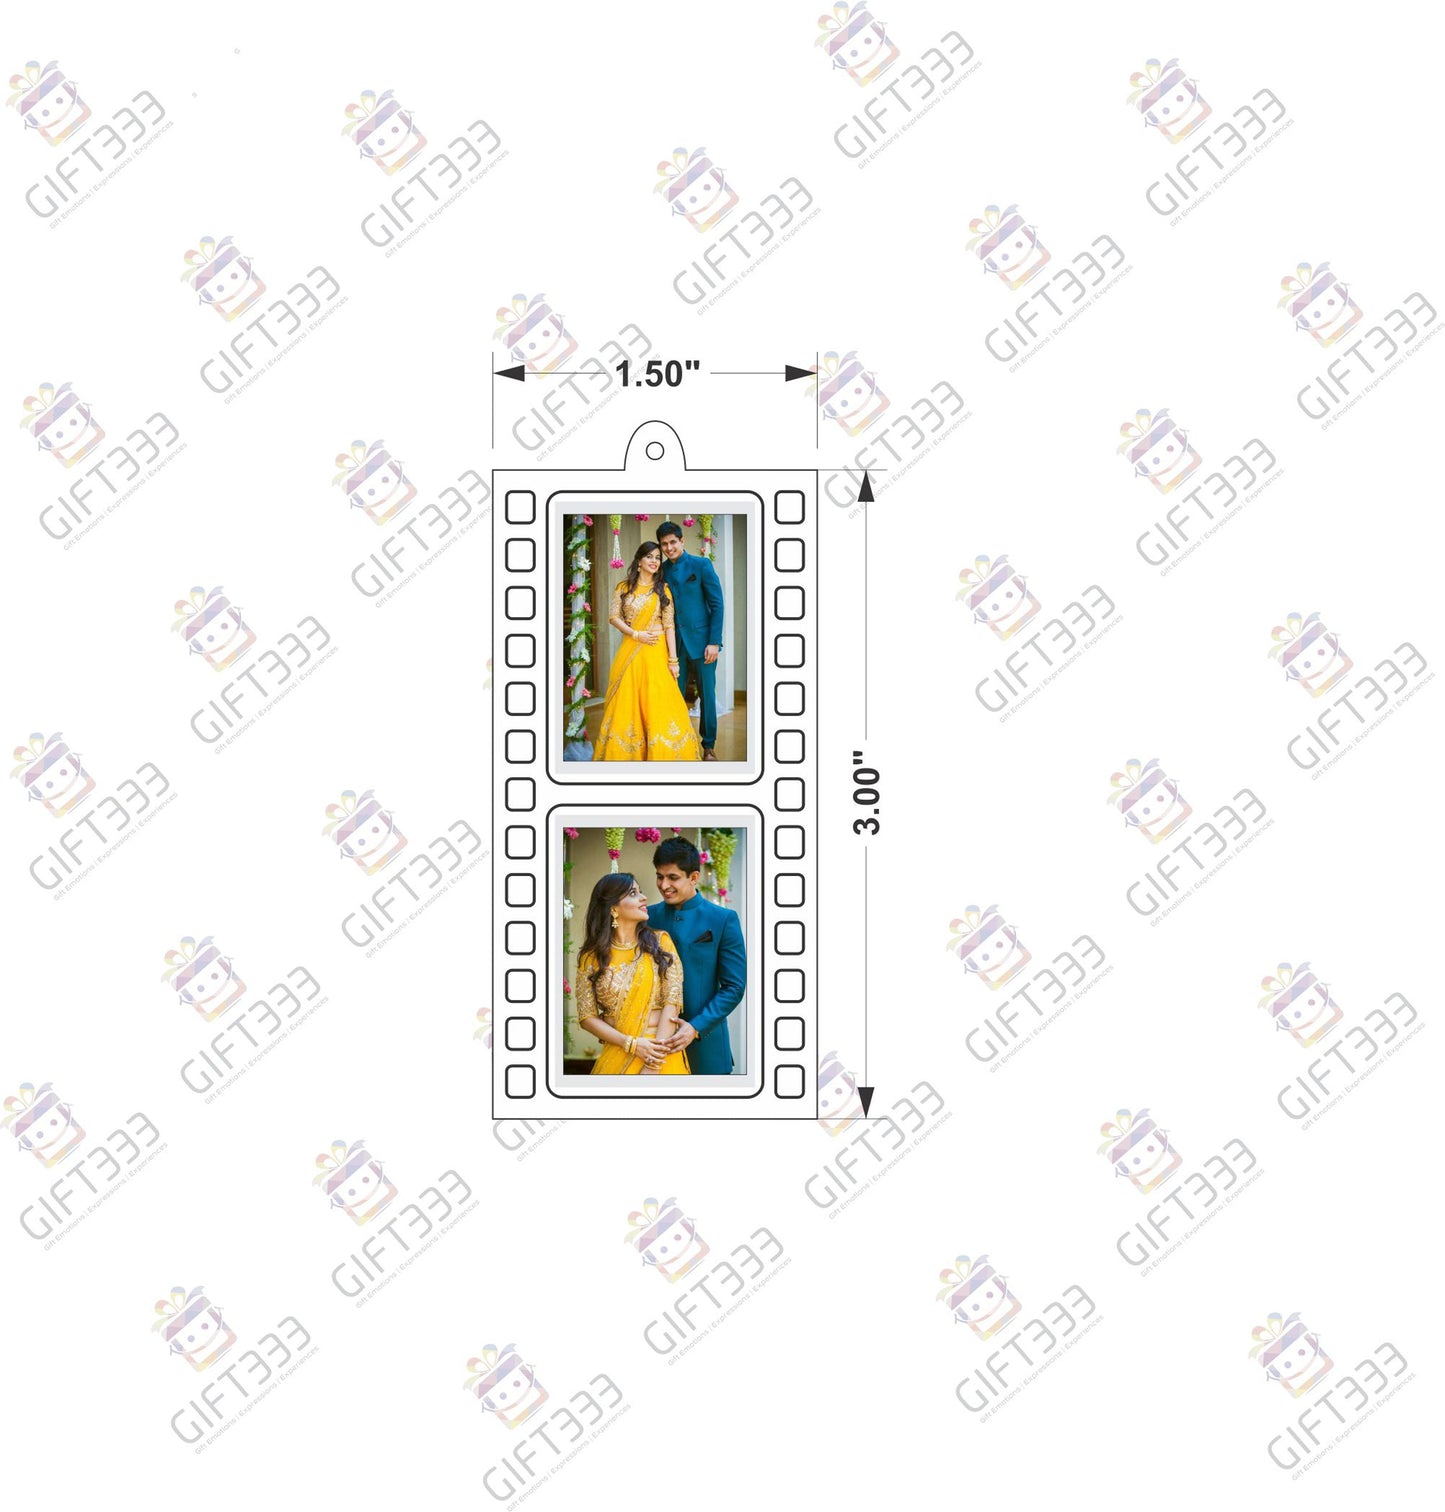 Personalized polaroid photo keychains | Transparent customized photo keychains